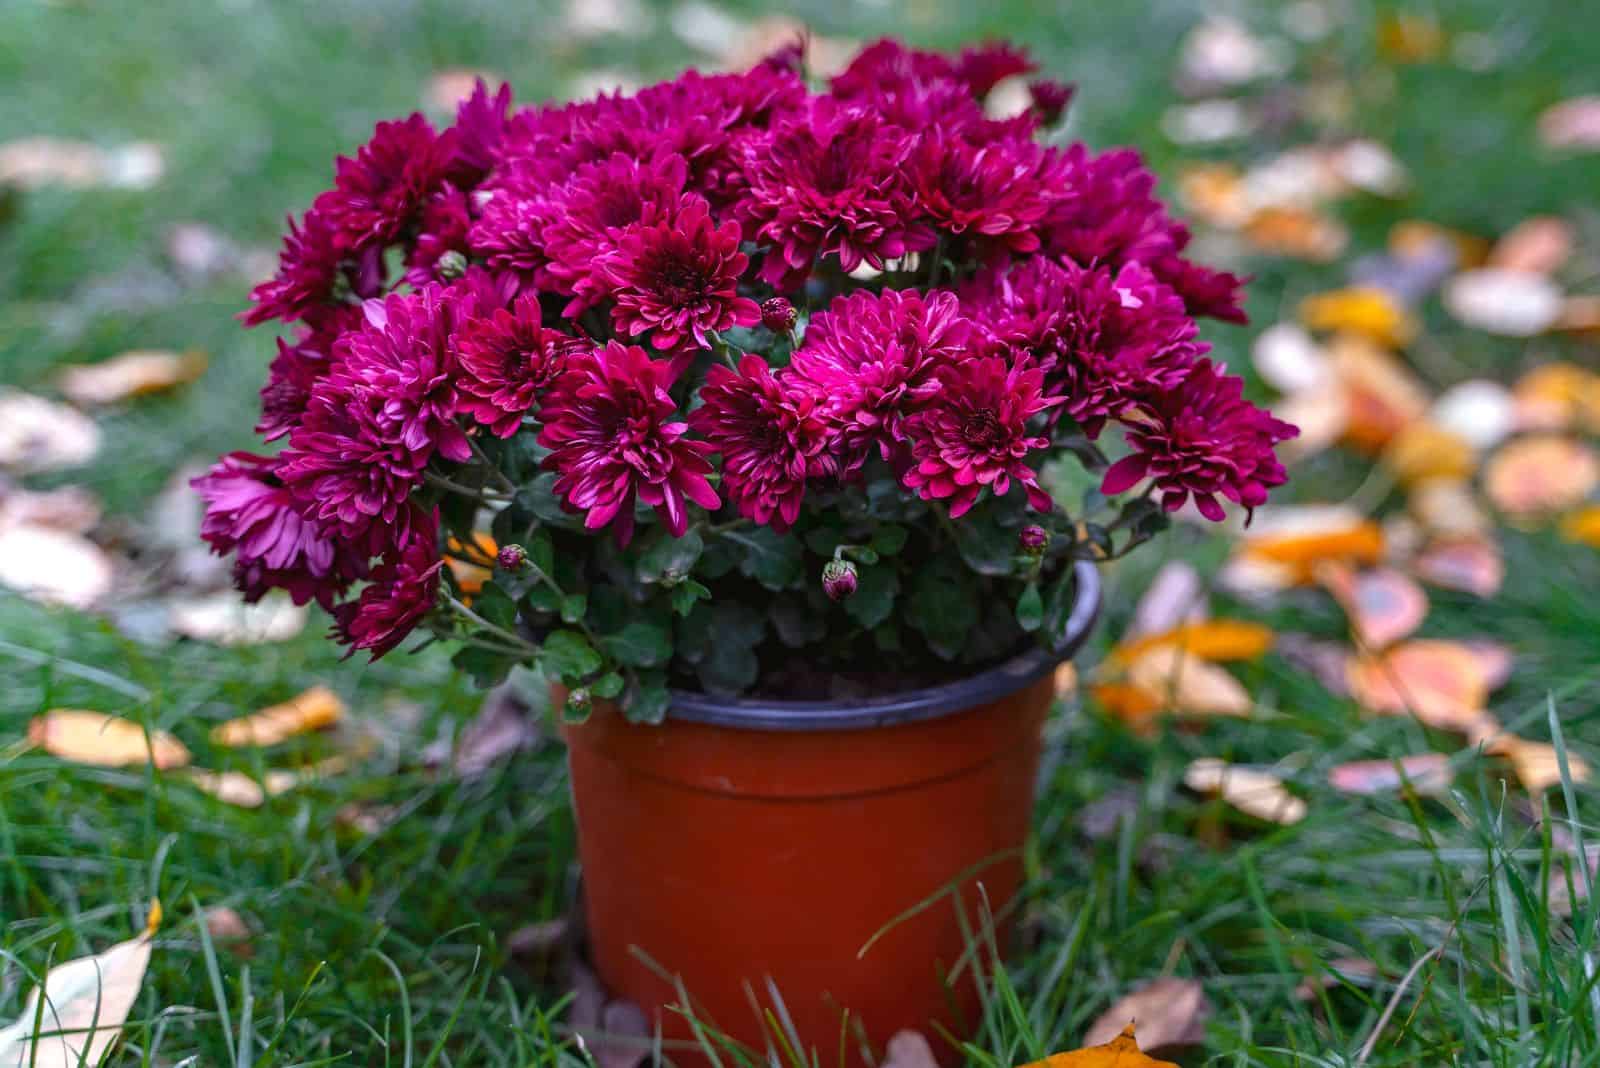 Chrysanthemum in a brown pot